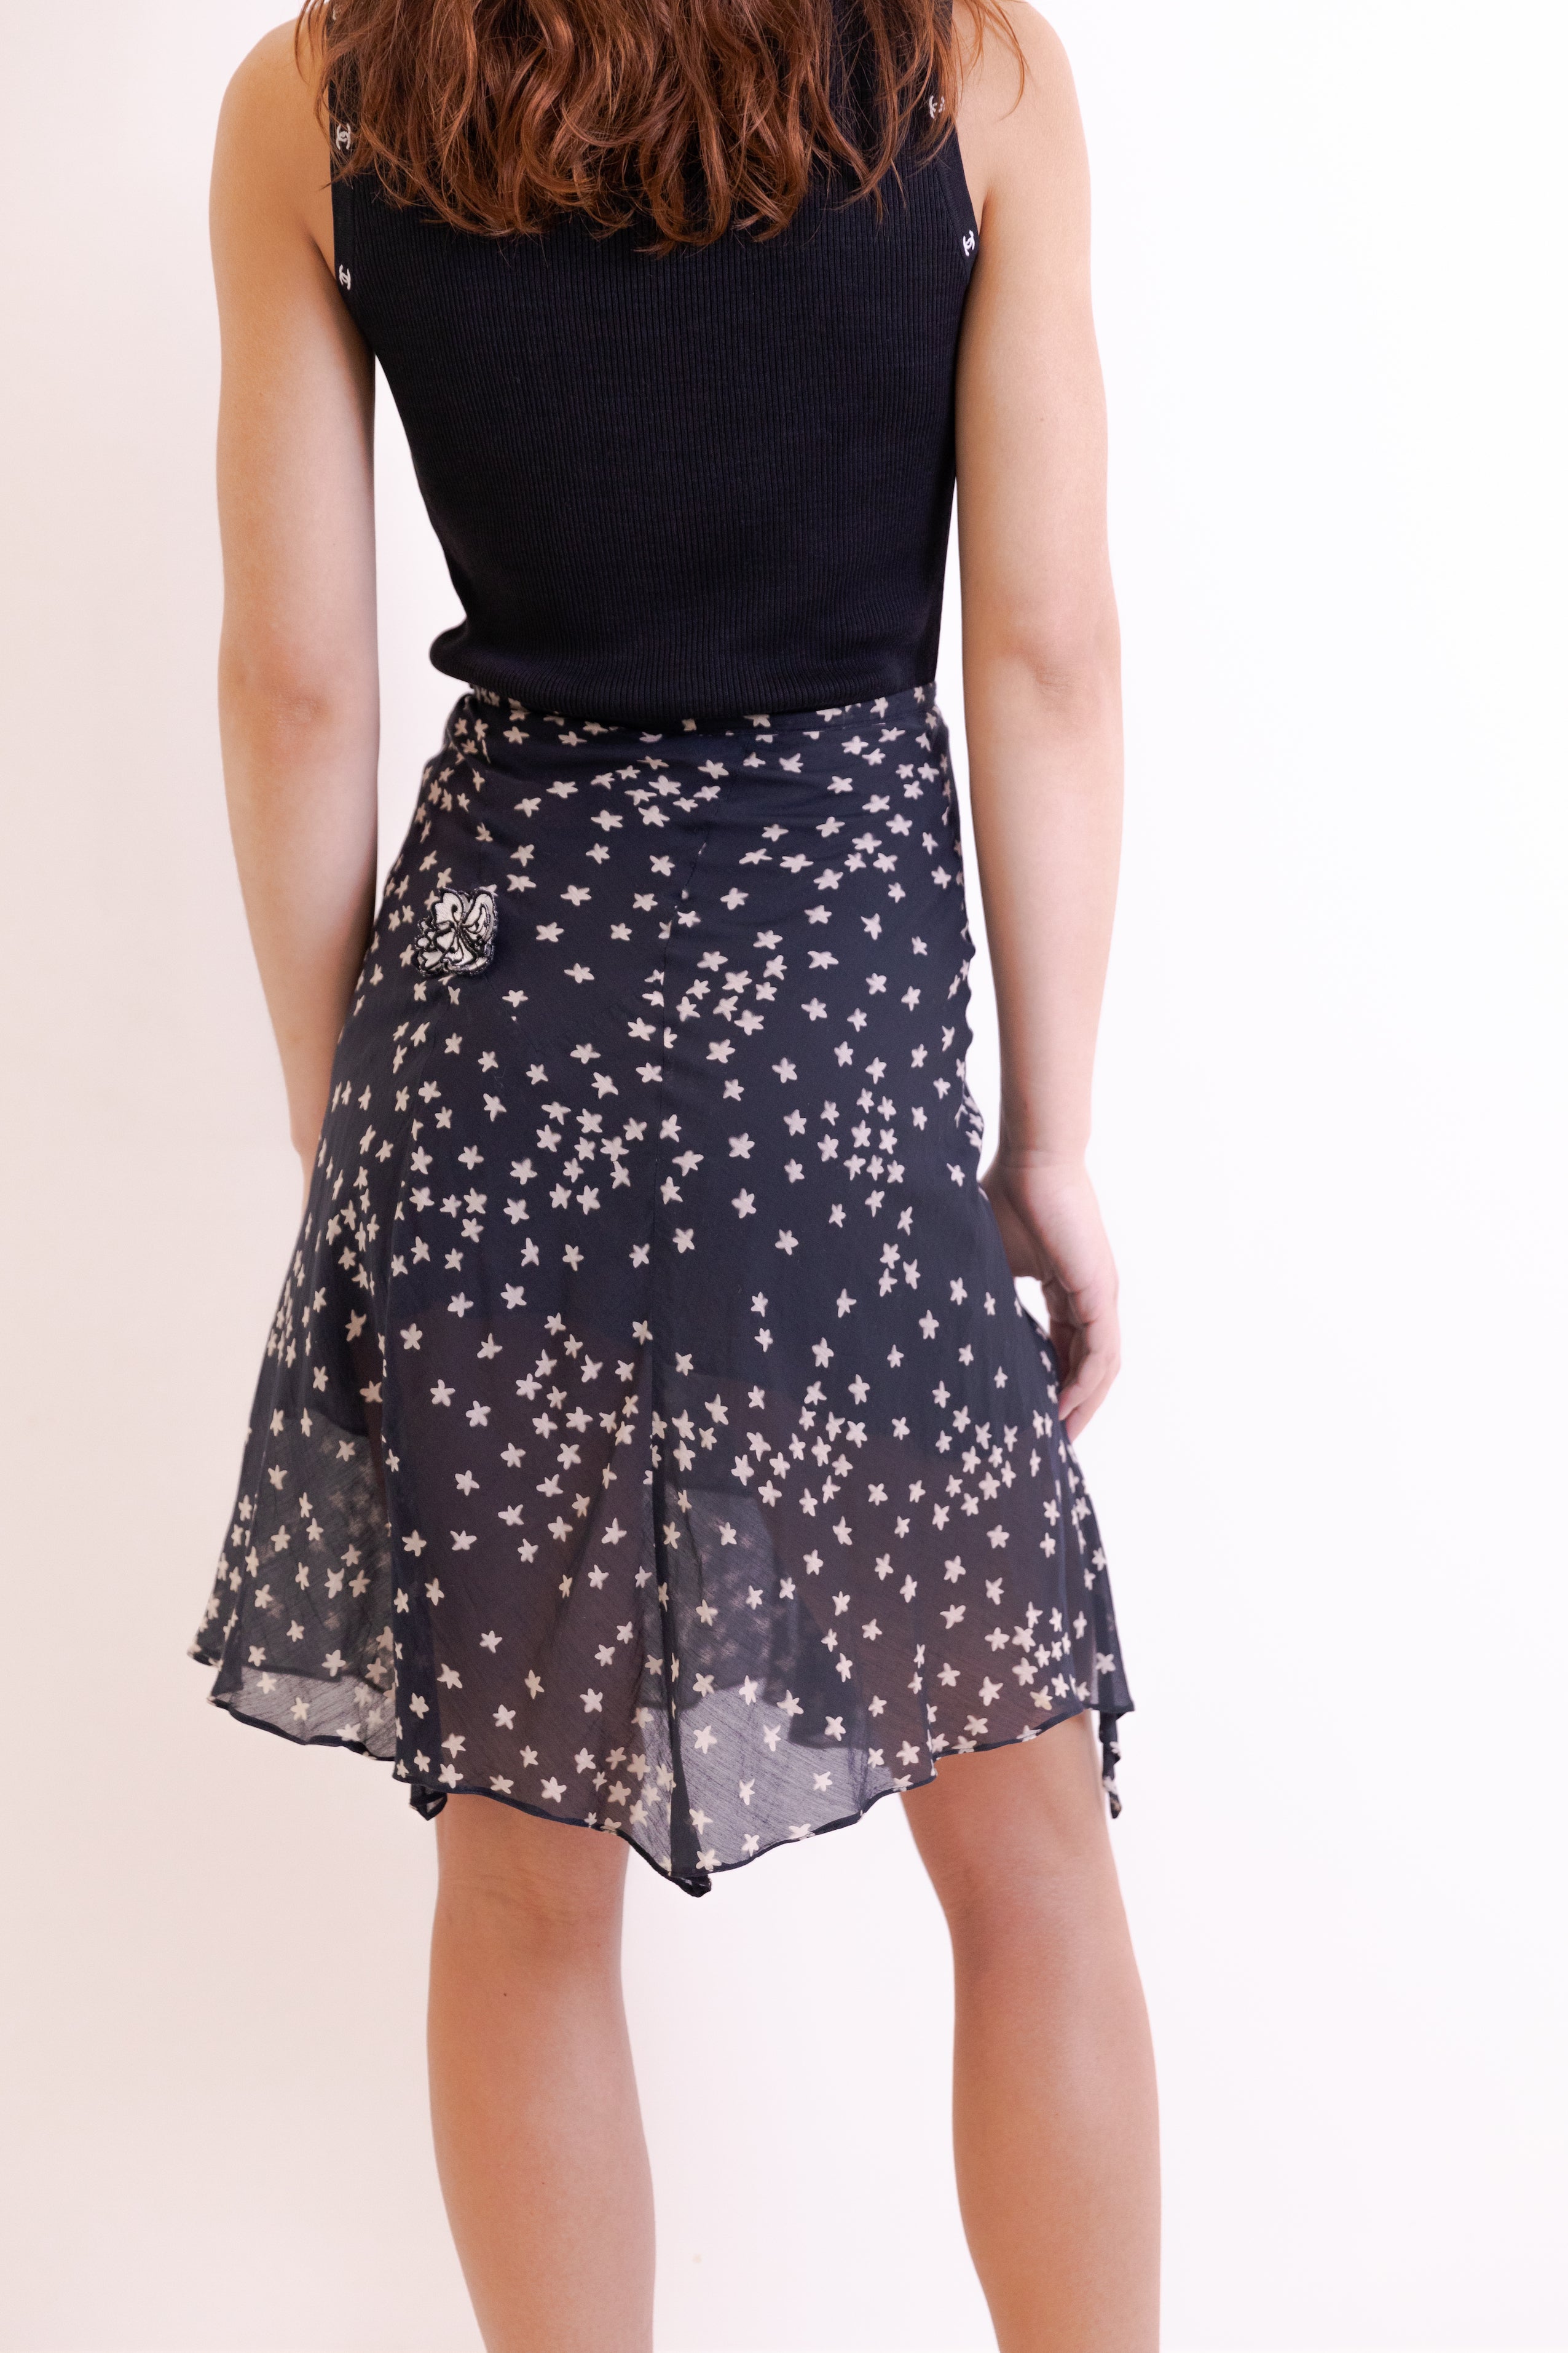 Lolita Lempicka <br> 90's 3D floral appliqué flowy star print skirt